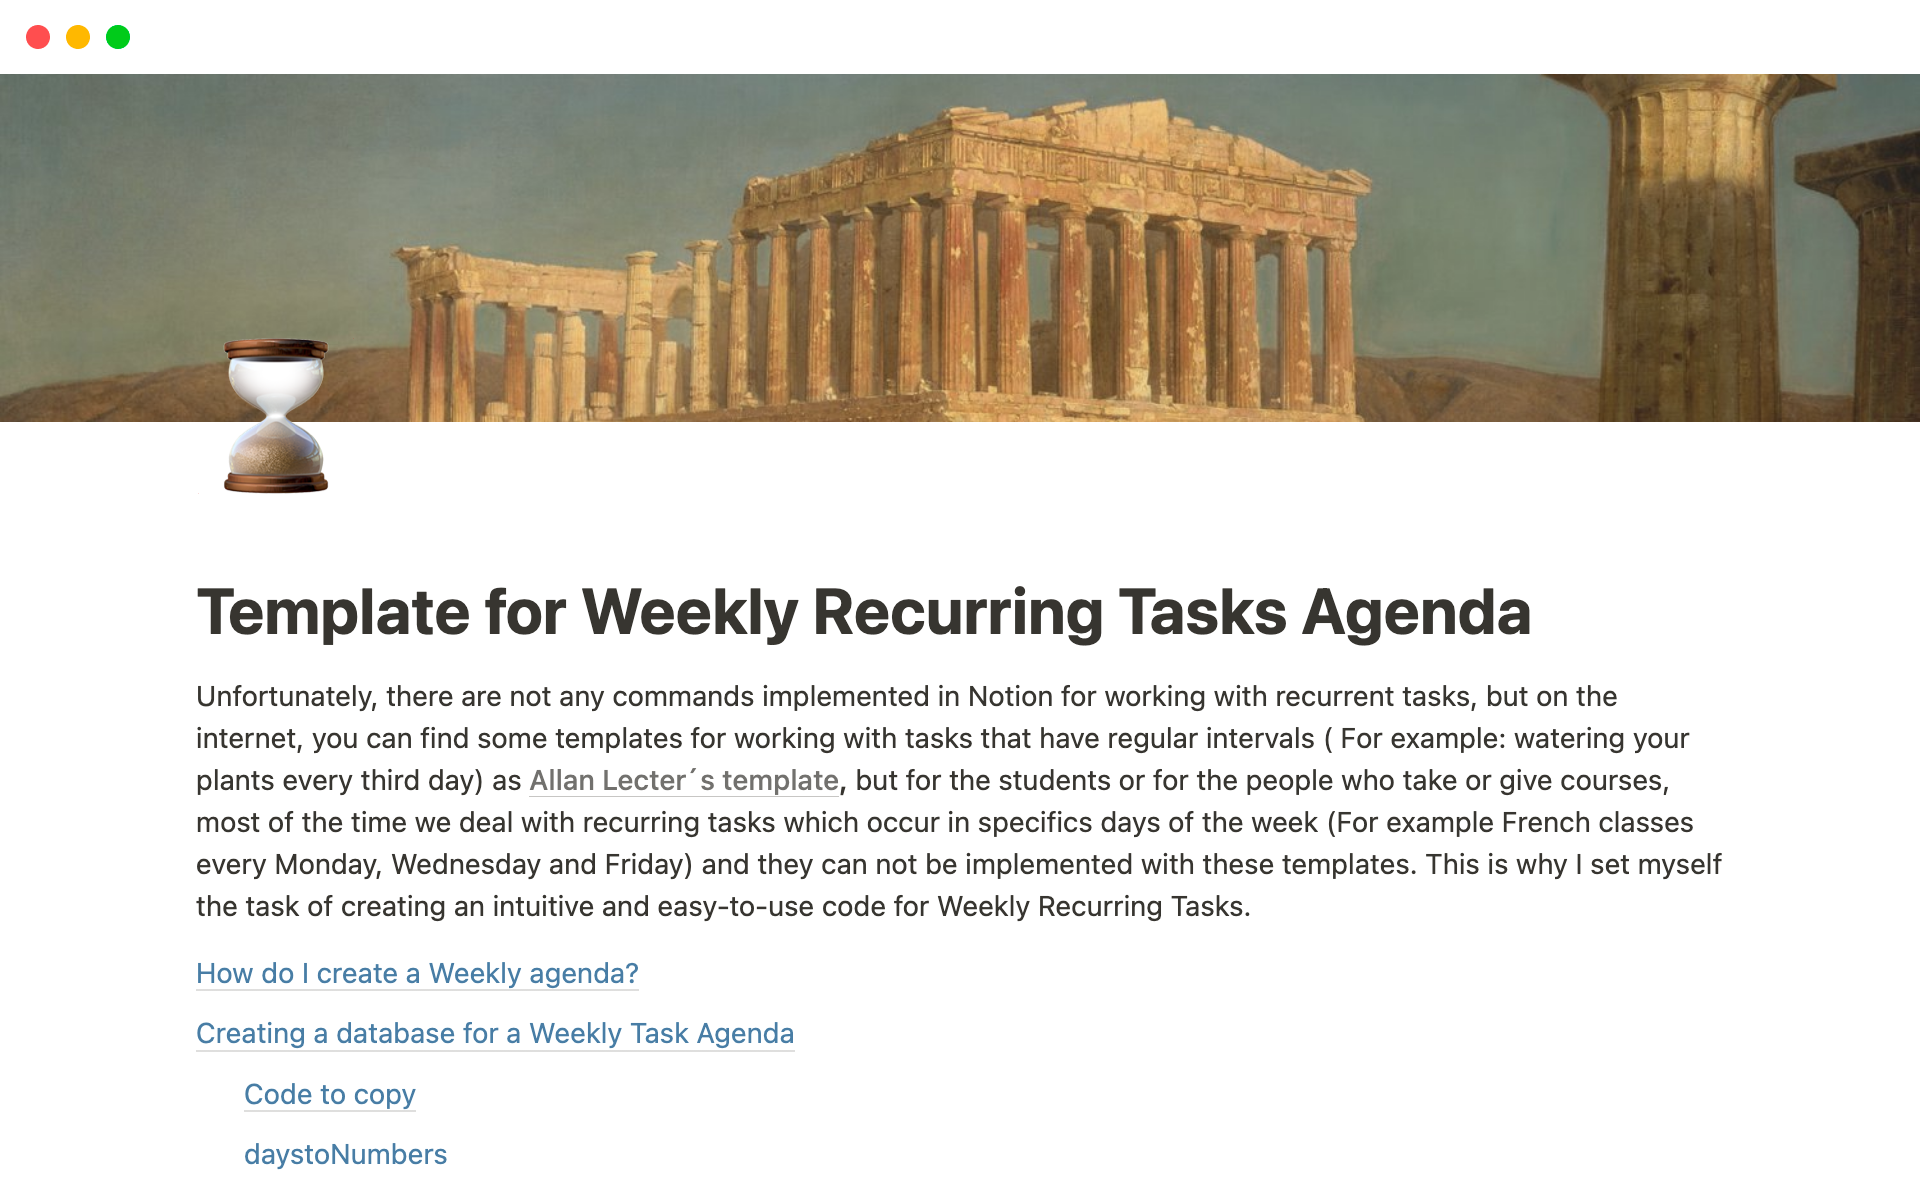 Aperçu du modèle de Weekly Recurring Tasks Agenda